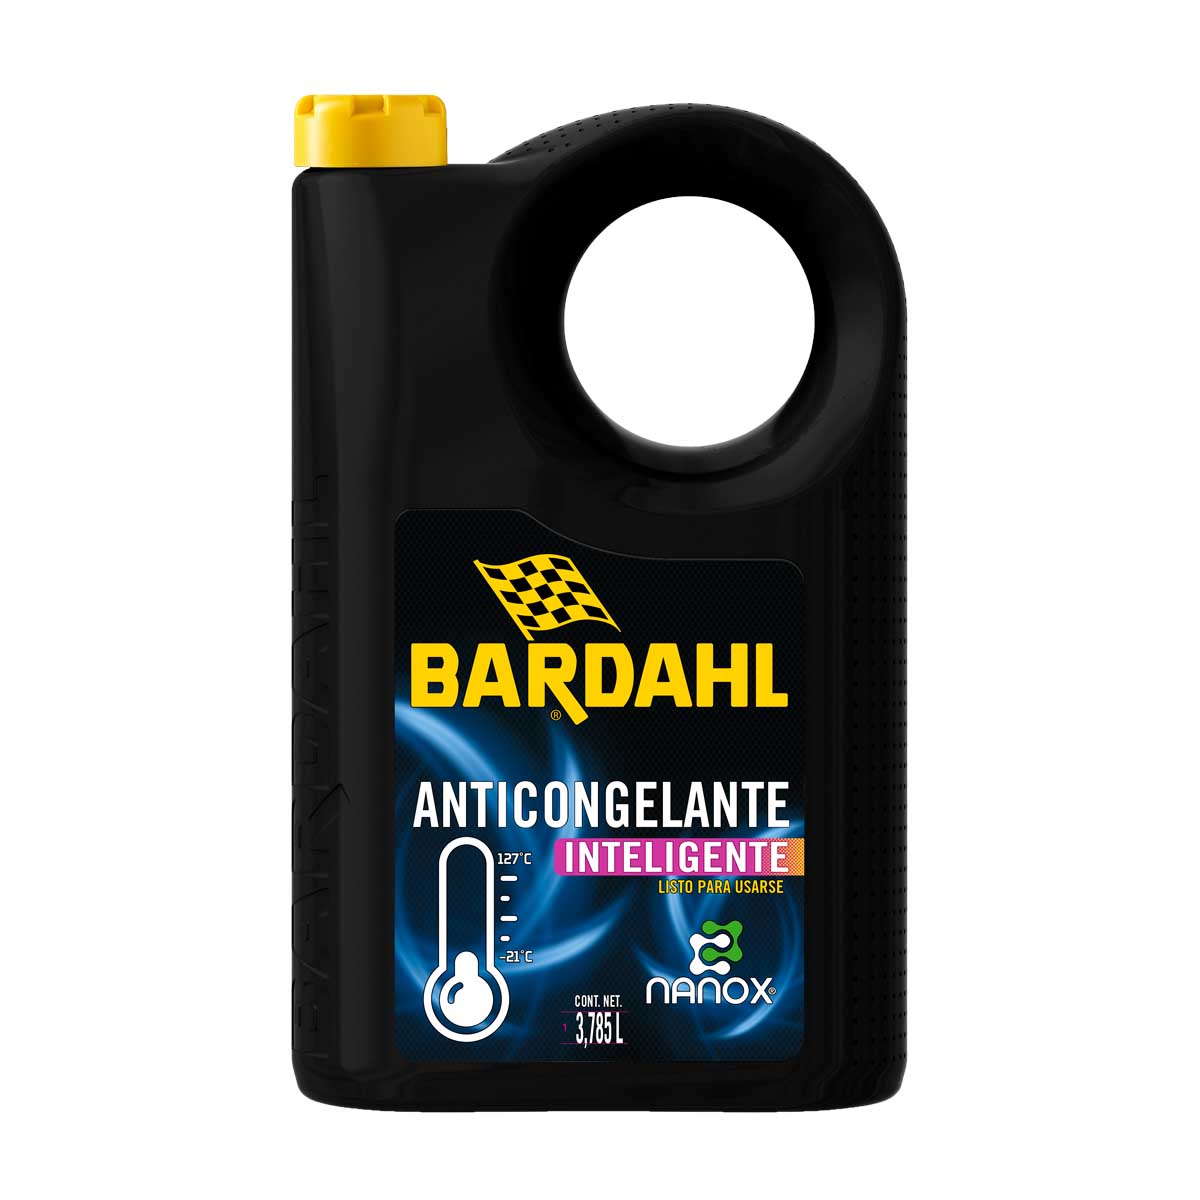 Anticongelante Bardahl Coolant Inteligente Nanox 3.785 L